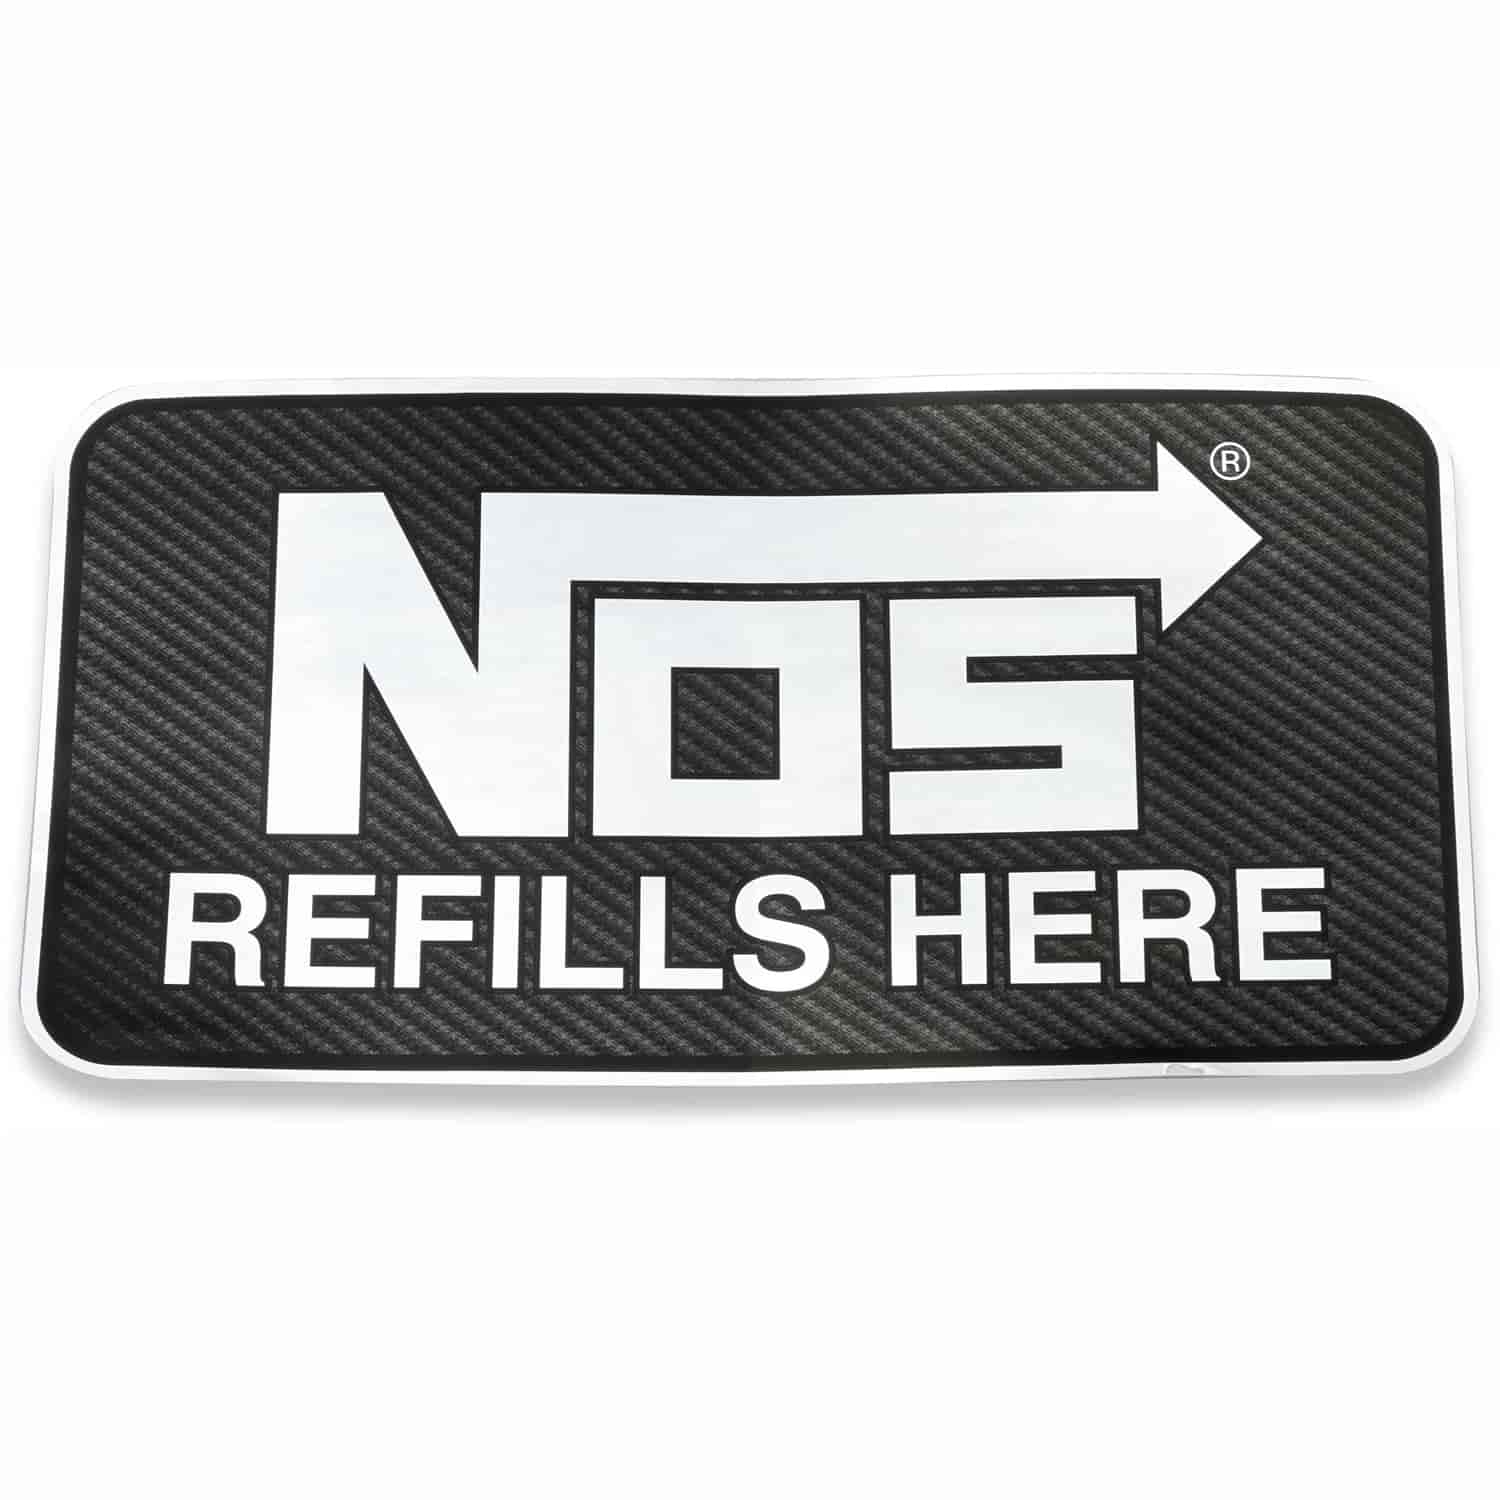 NOS Refills Here Decal [Carbon Fiber Printed Vinyl]